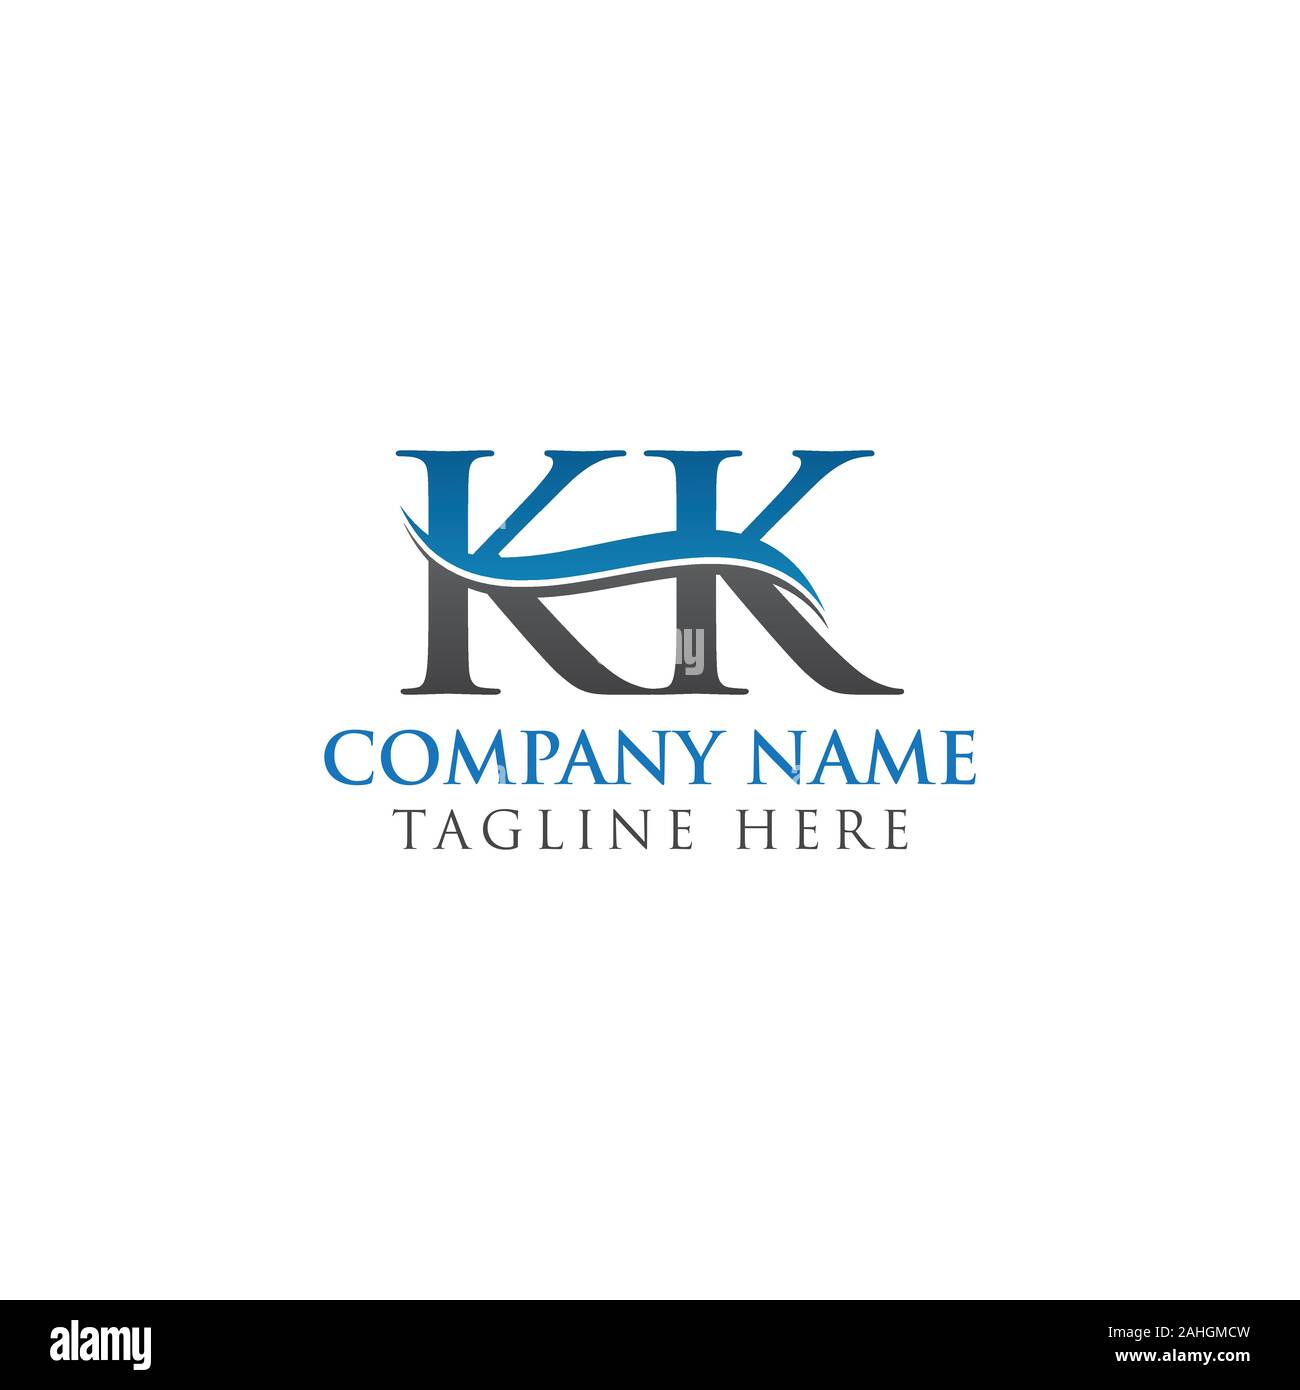 Iniziale lettera KK Logo Design template vettoriale. Abstract lettera KK logo Design Illustrazione Vettoriale